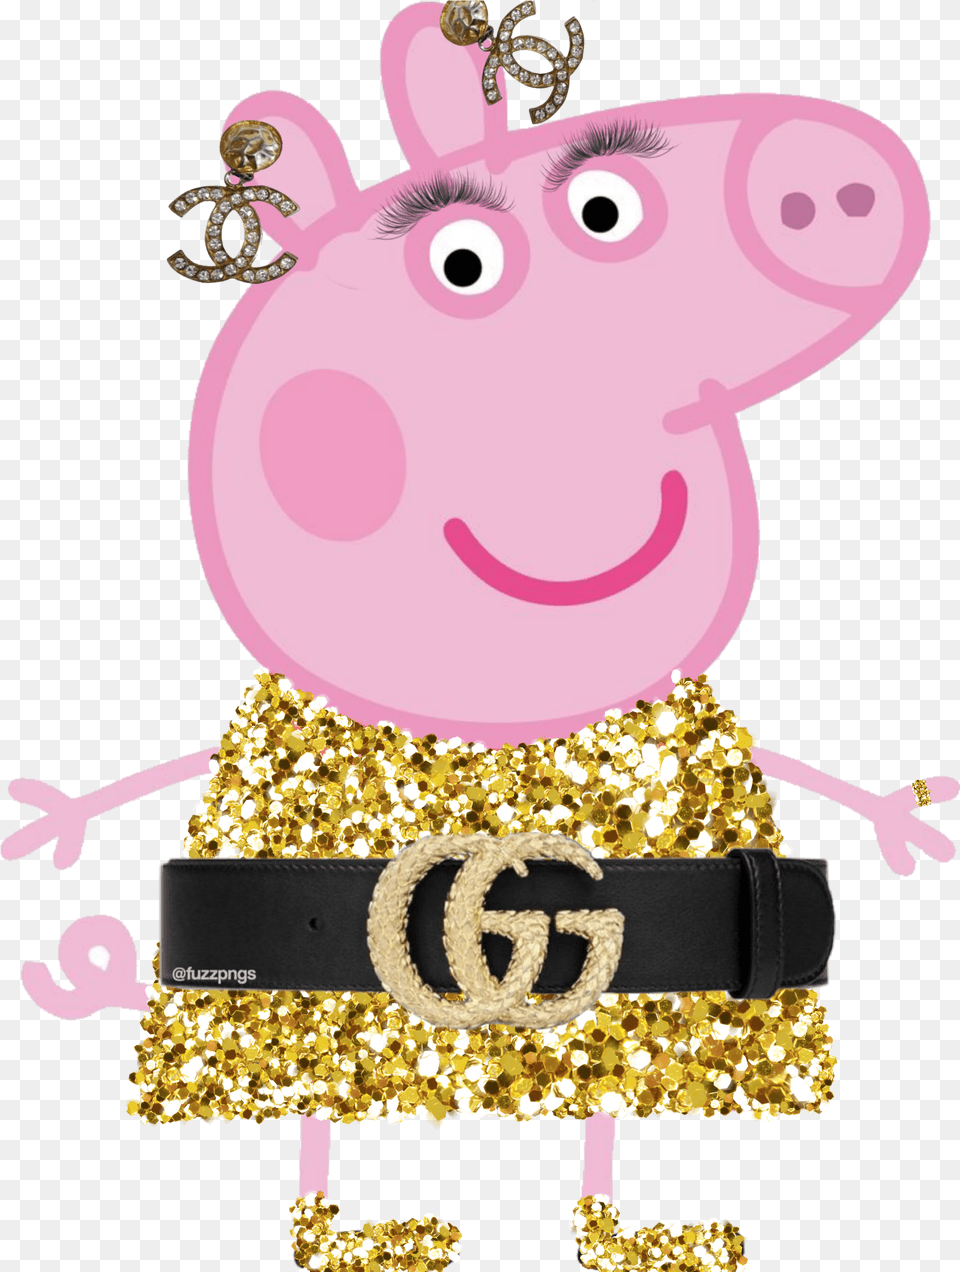 Peppapig Luxury Gucci Peppapiggucci Chanel Pig Peppa Pig, Accessories, Baby, Person, Belt Png